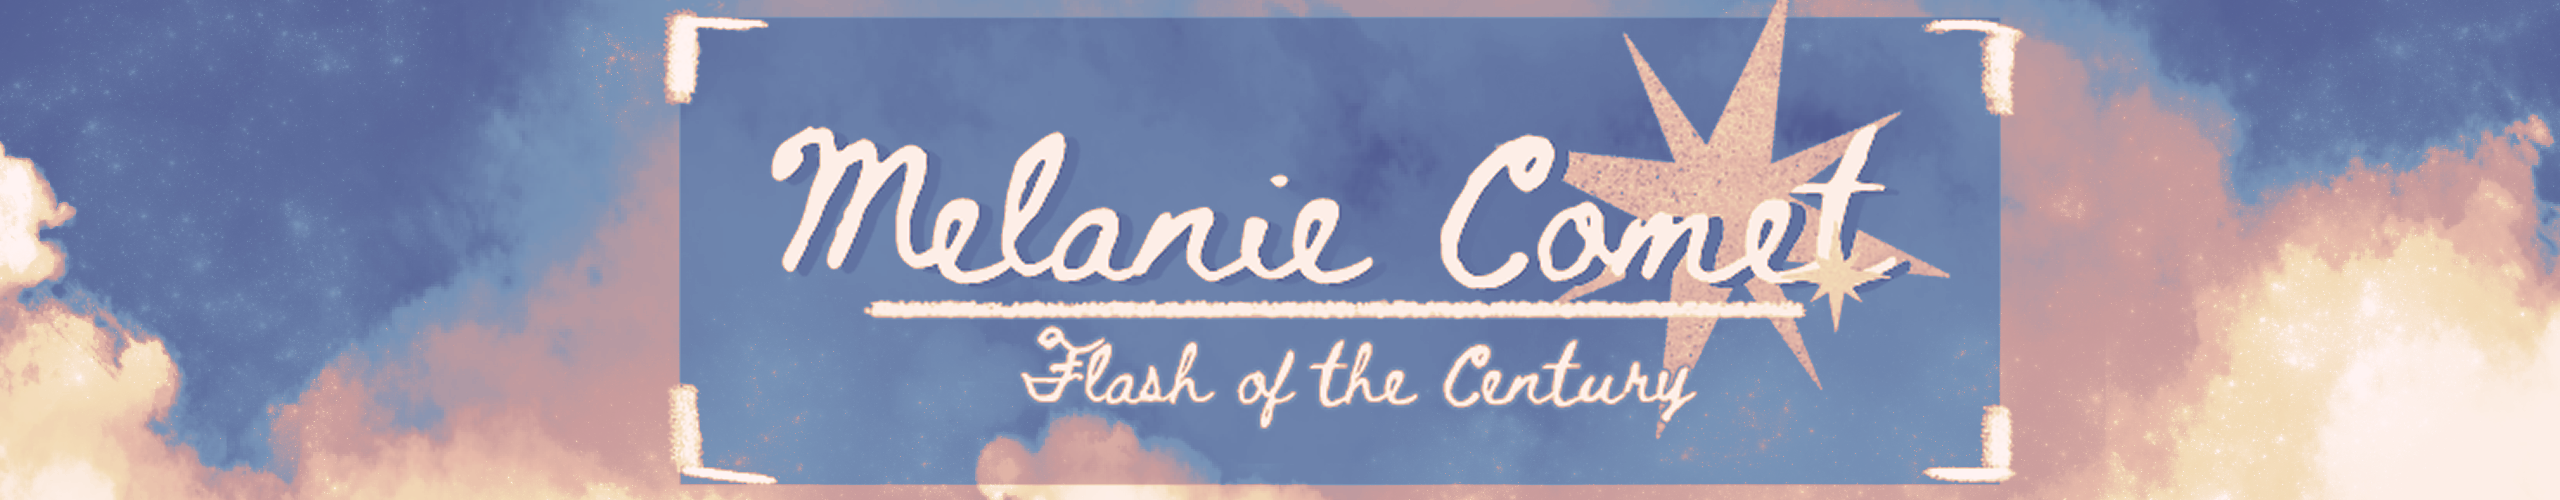 Melanie Comet : Flash of the Century